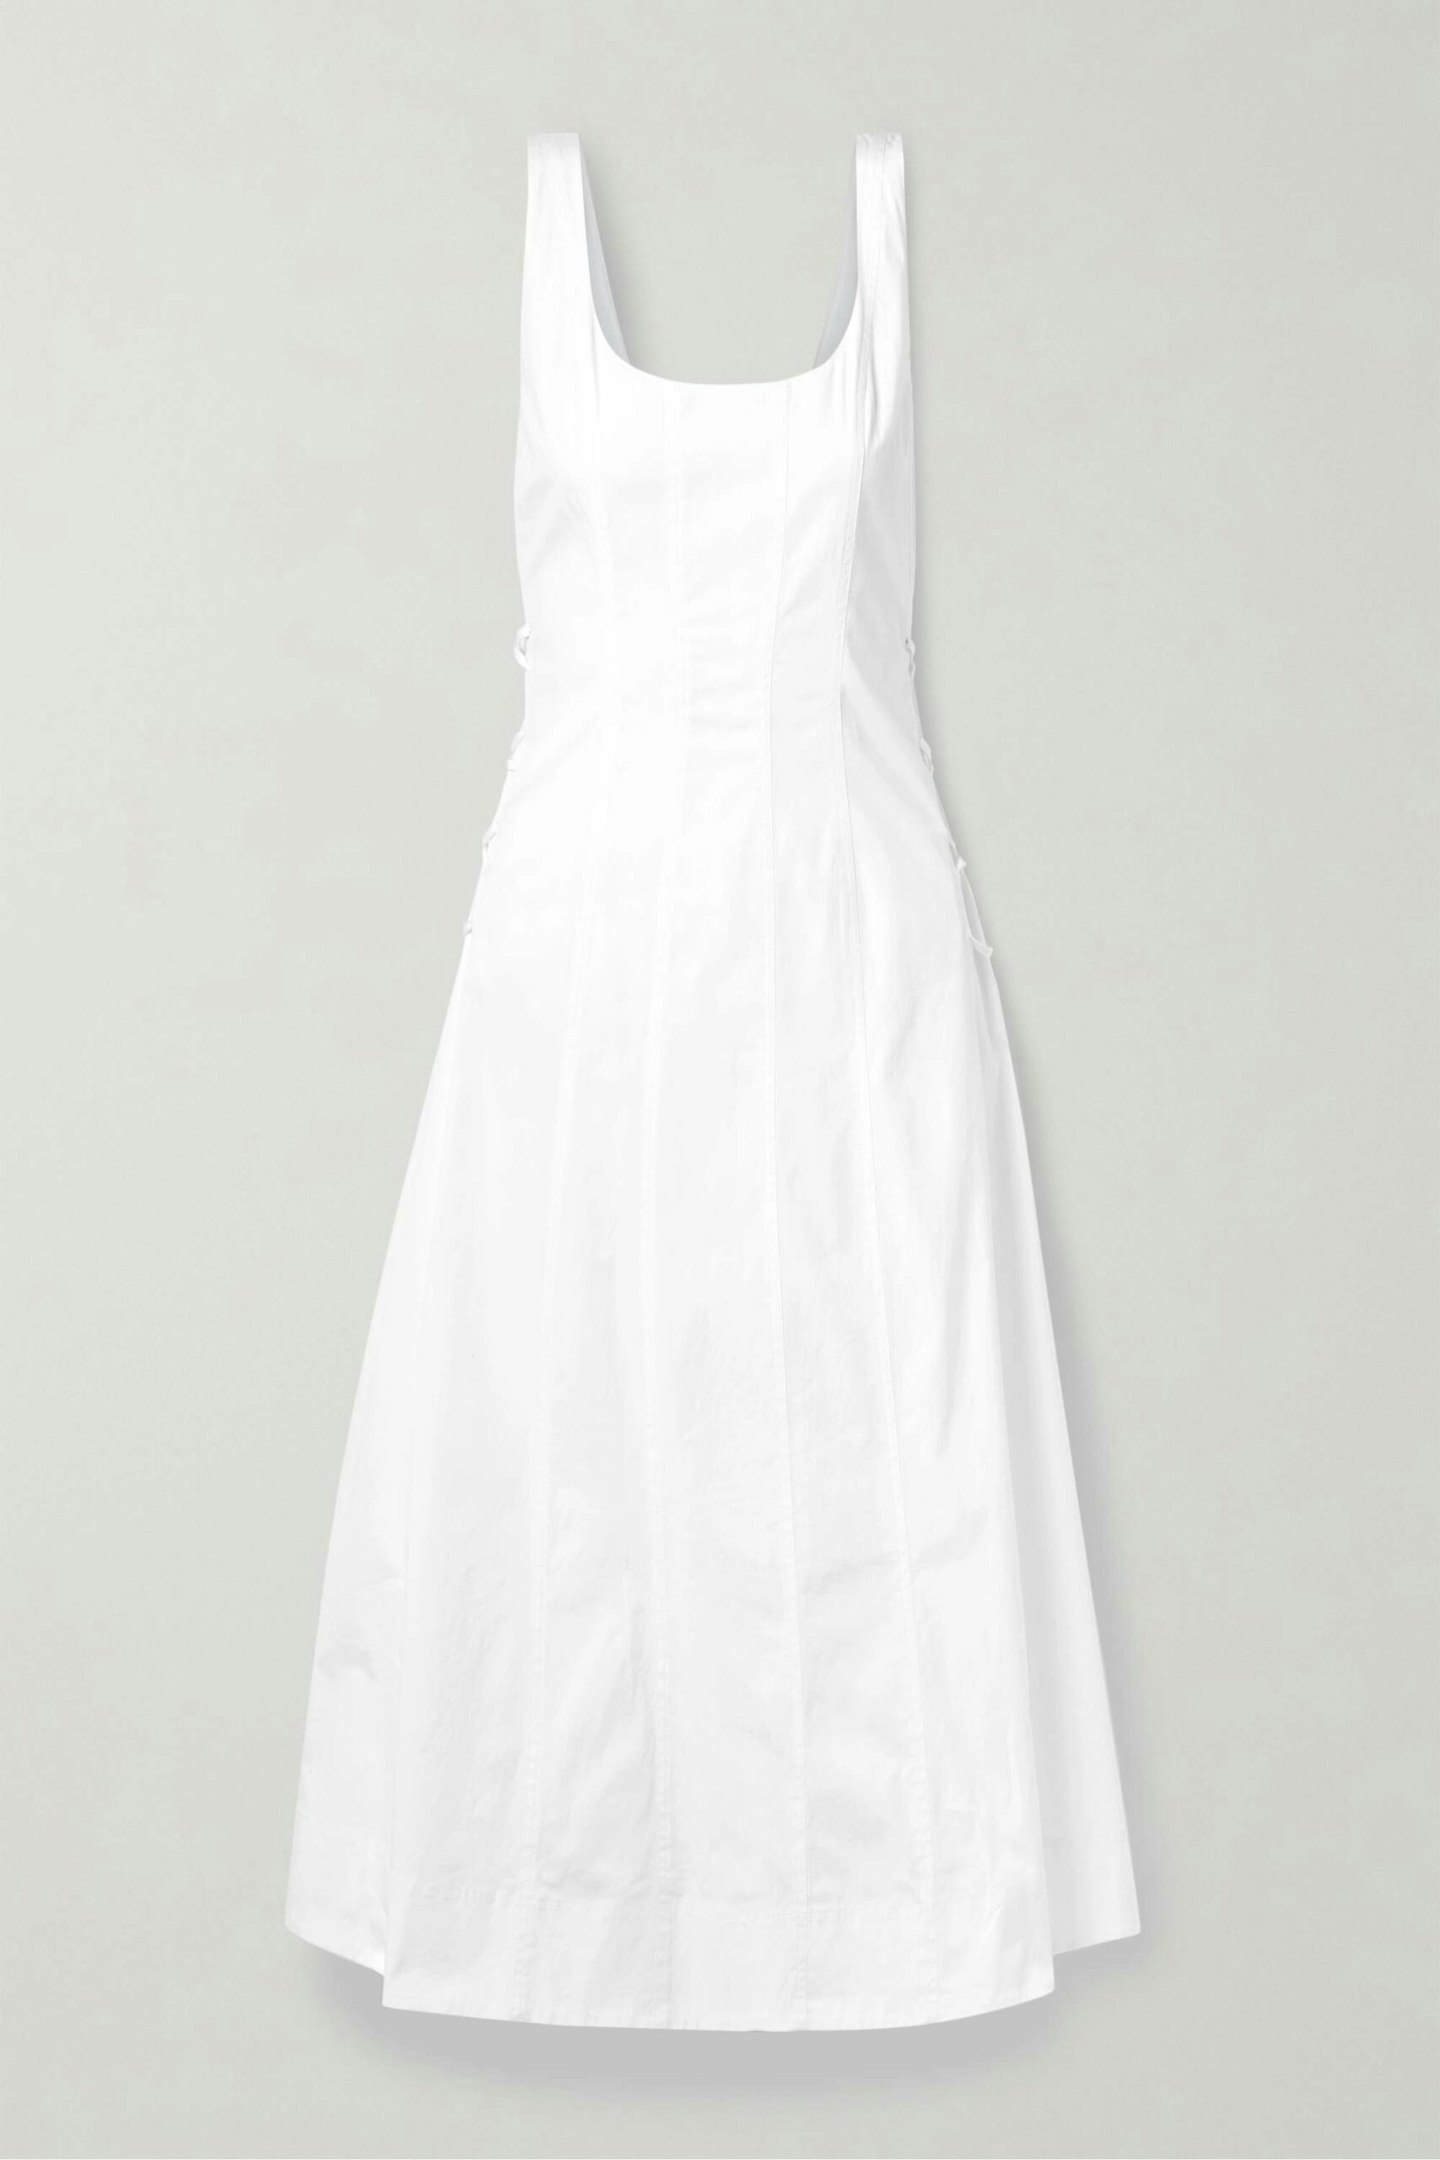 Veronica Beard, Jolie Paneled Stretch-Cotton Poplin Midi Dress